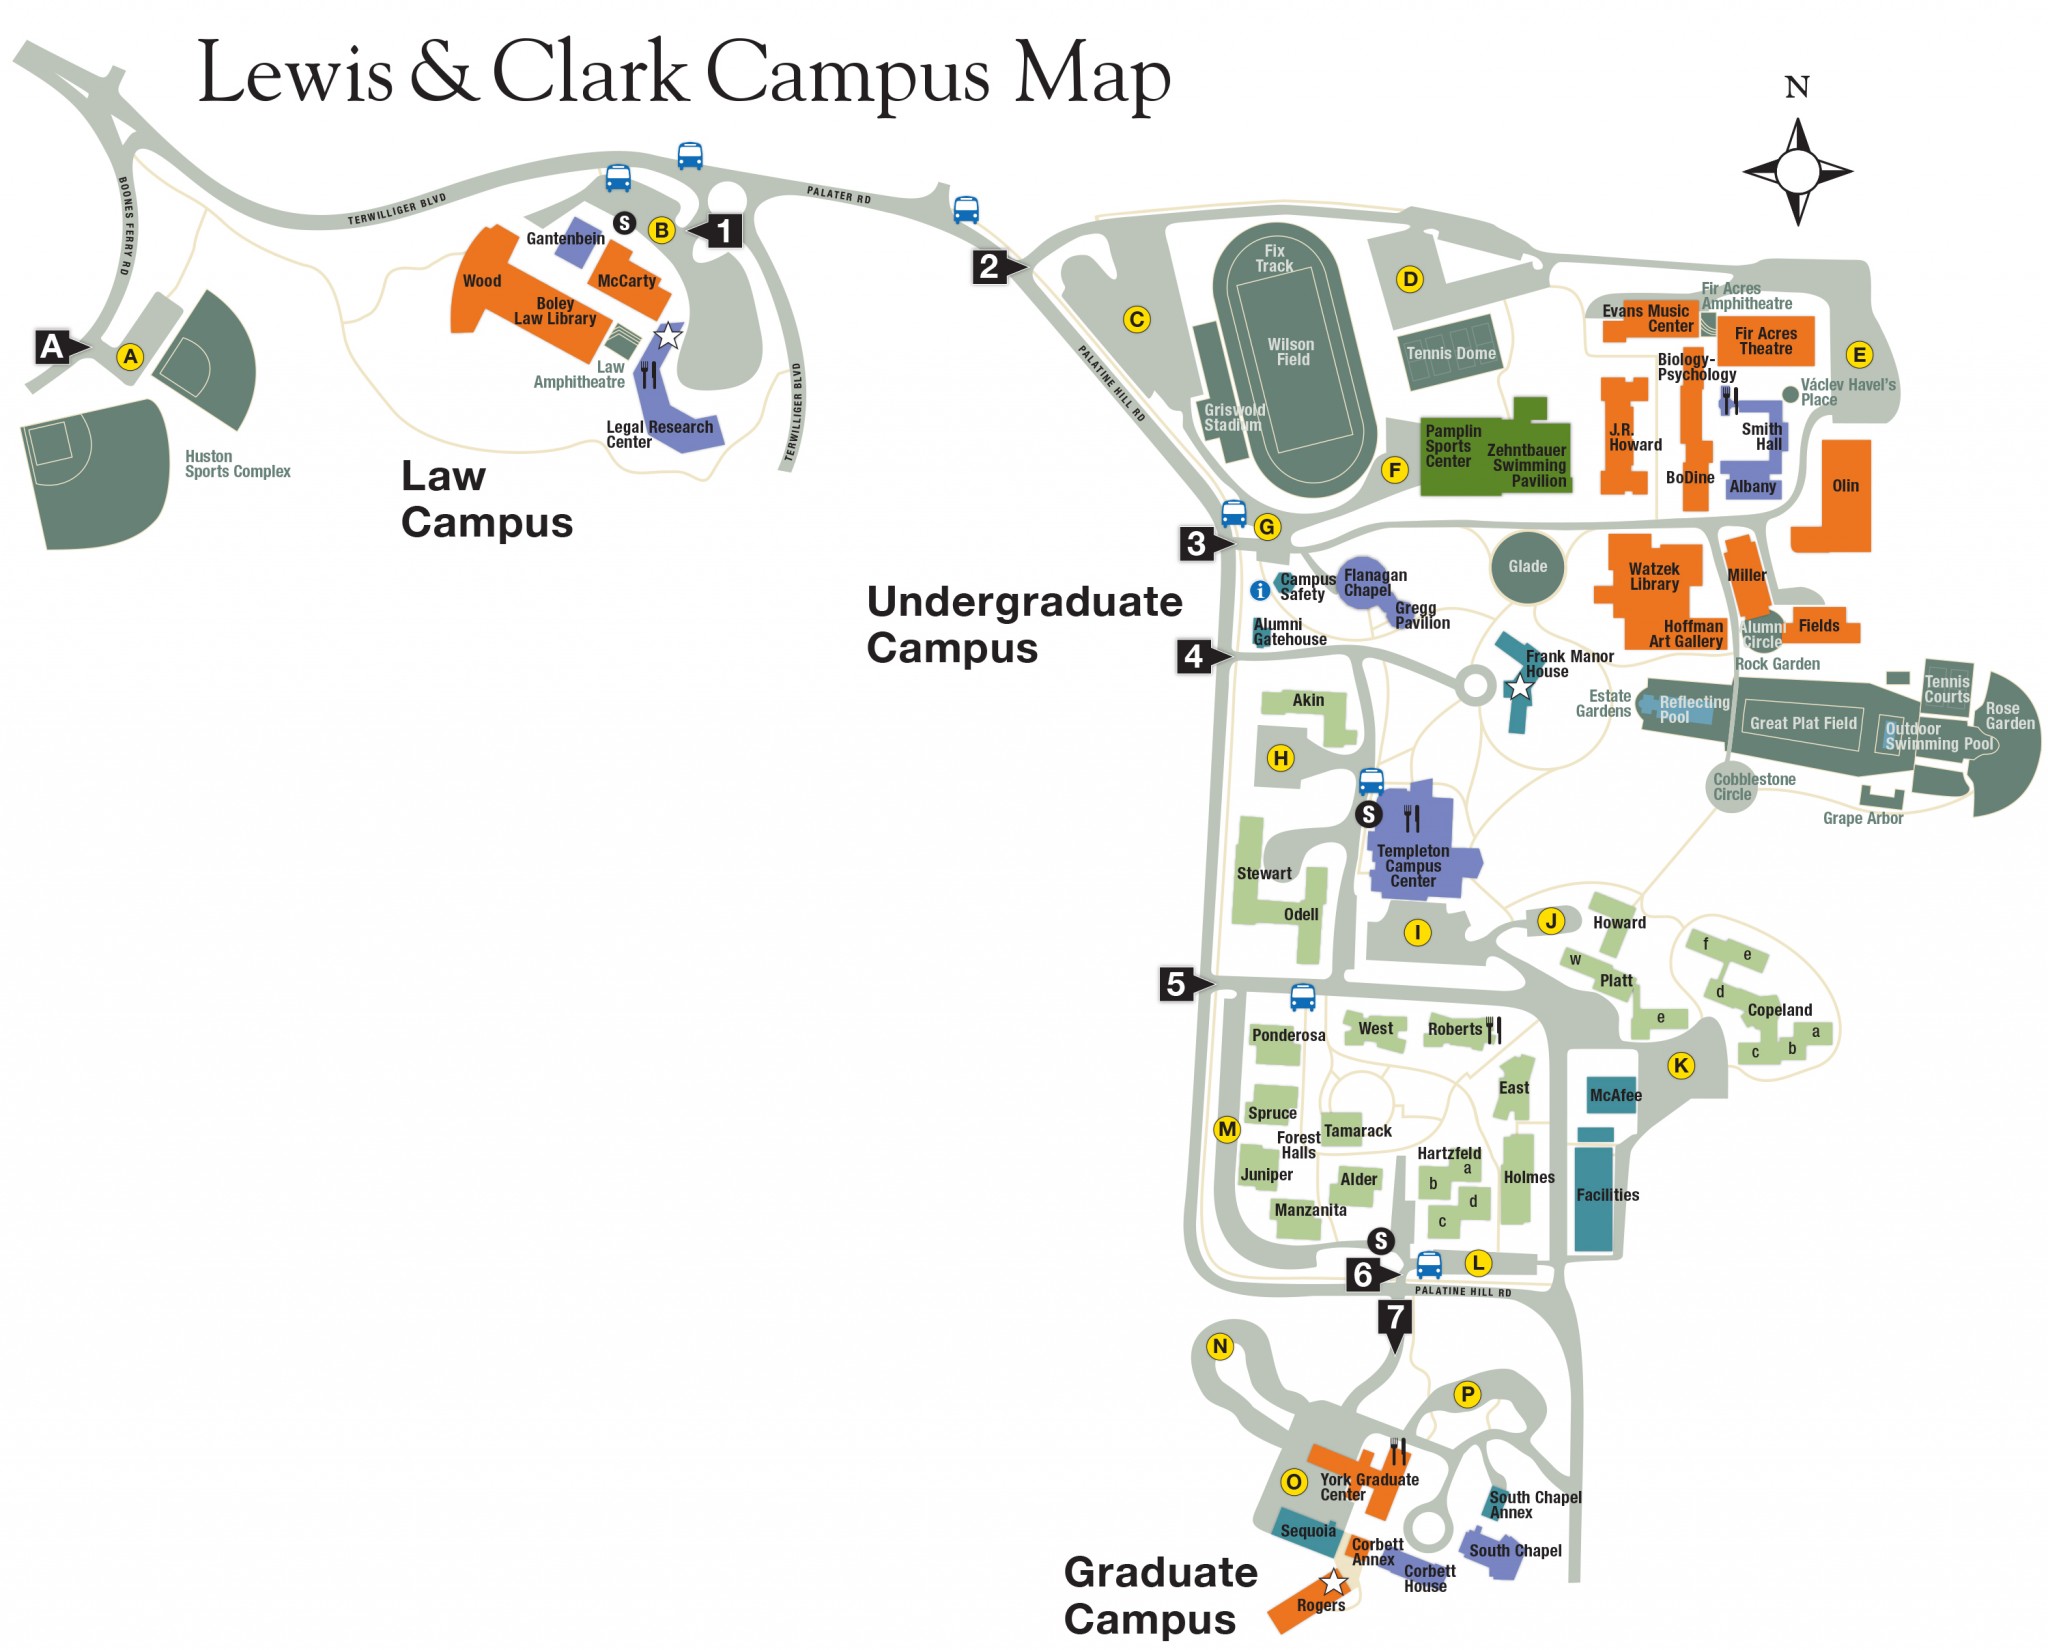 lewis and clark community college campus map Lewis And Clark Campus Map Campus Map lewis and clark community college campus map